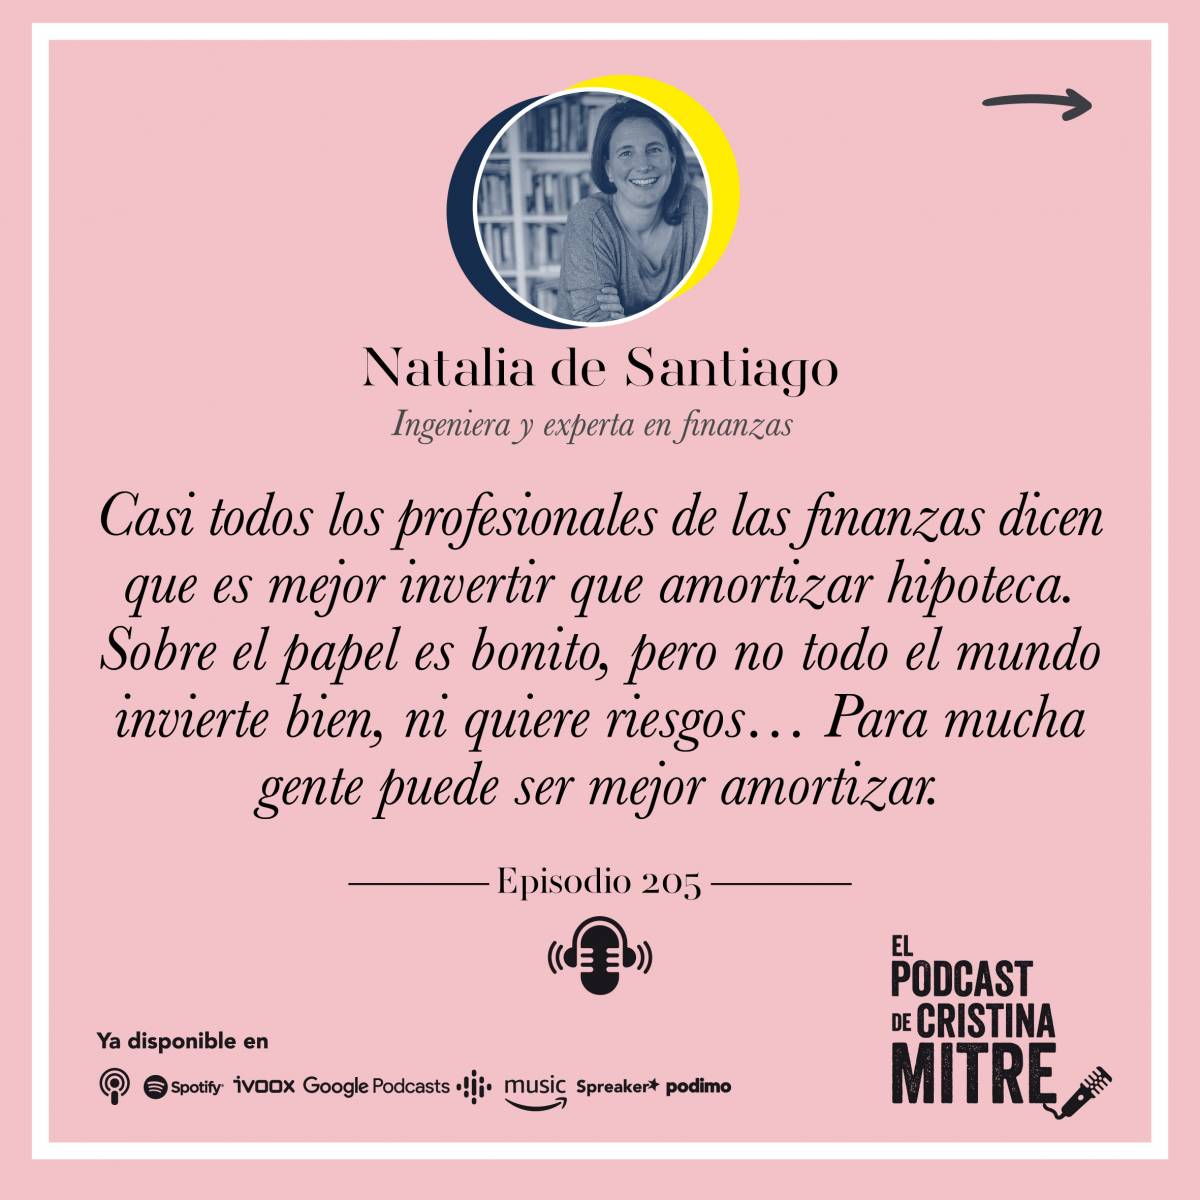 Podcast Cristina Mitre Natalia de Santiago finanzas